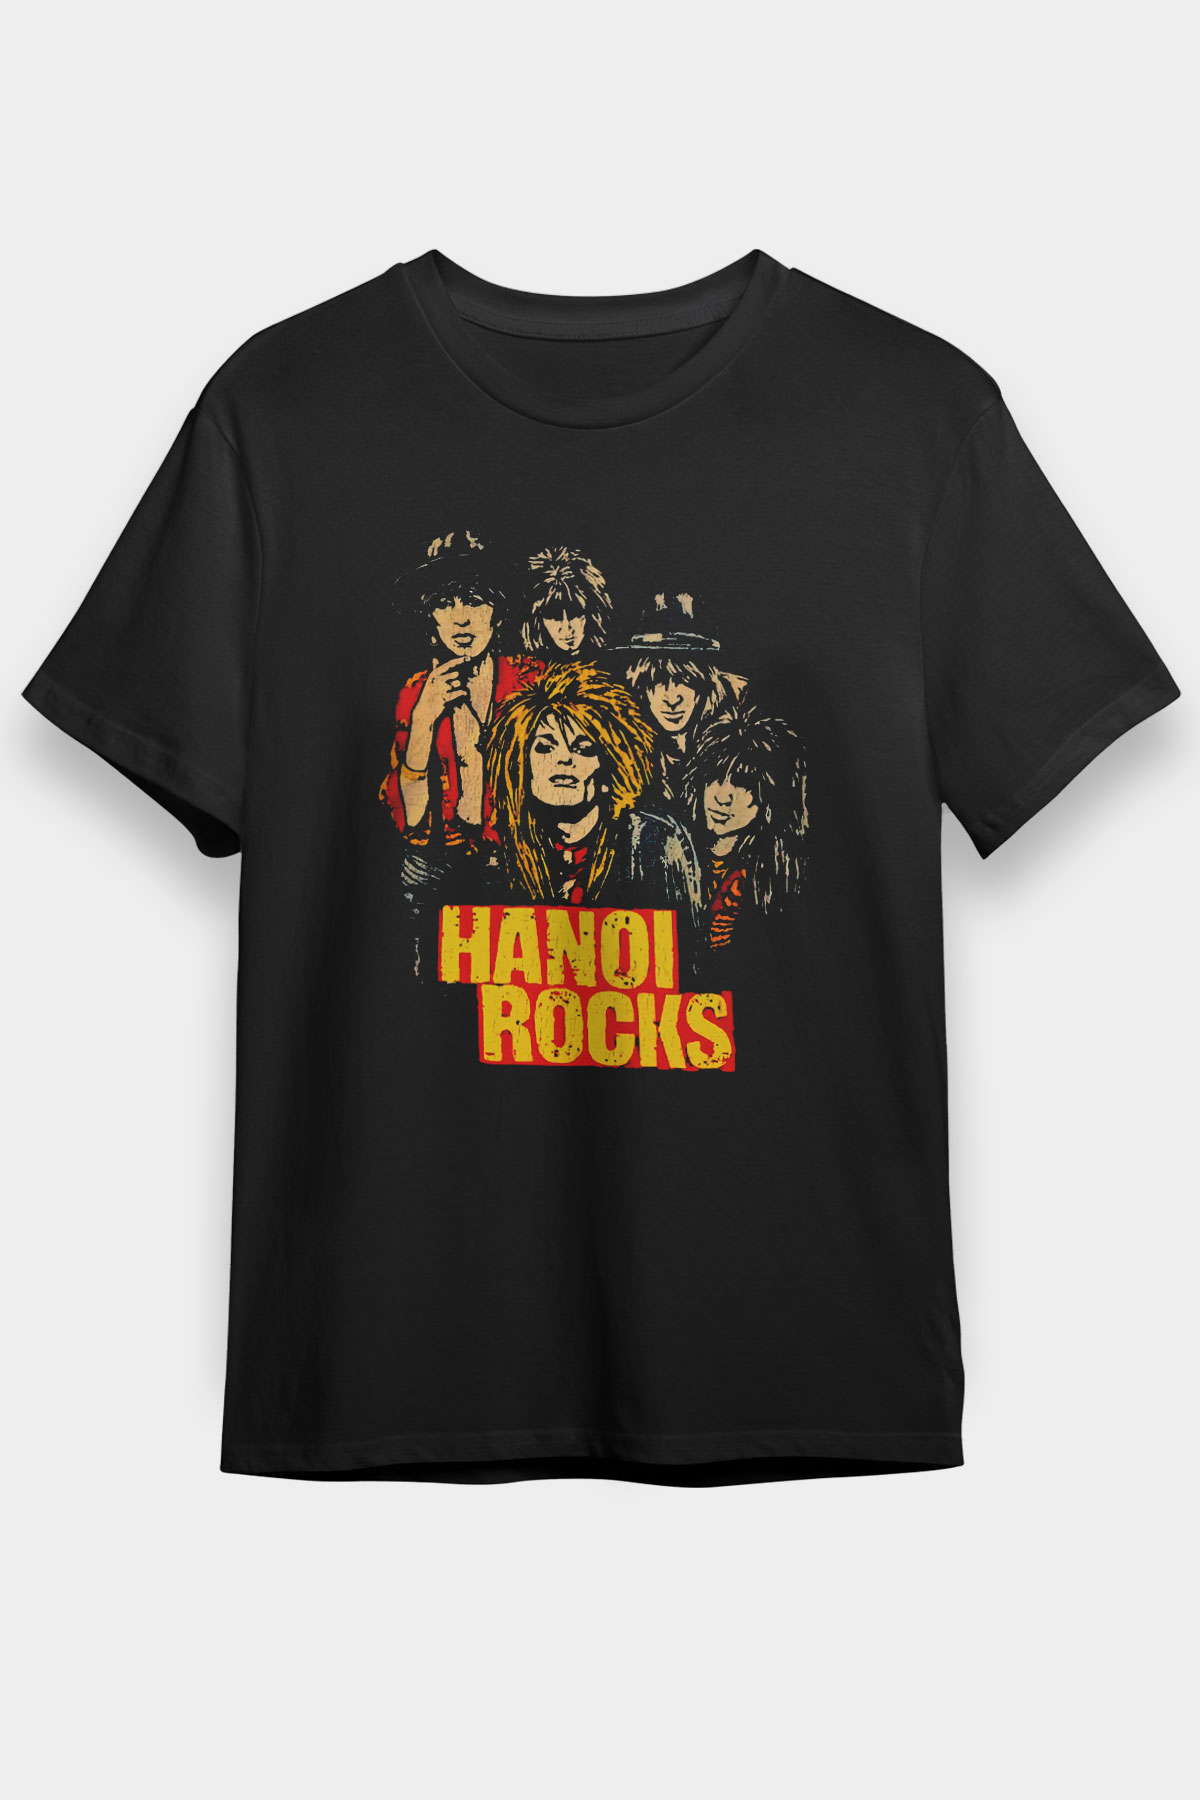 Hanoi Rocks T shirt, Music Band ,Unisex Tshirt 11